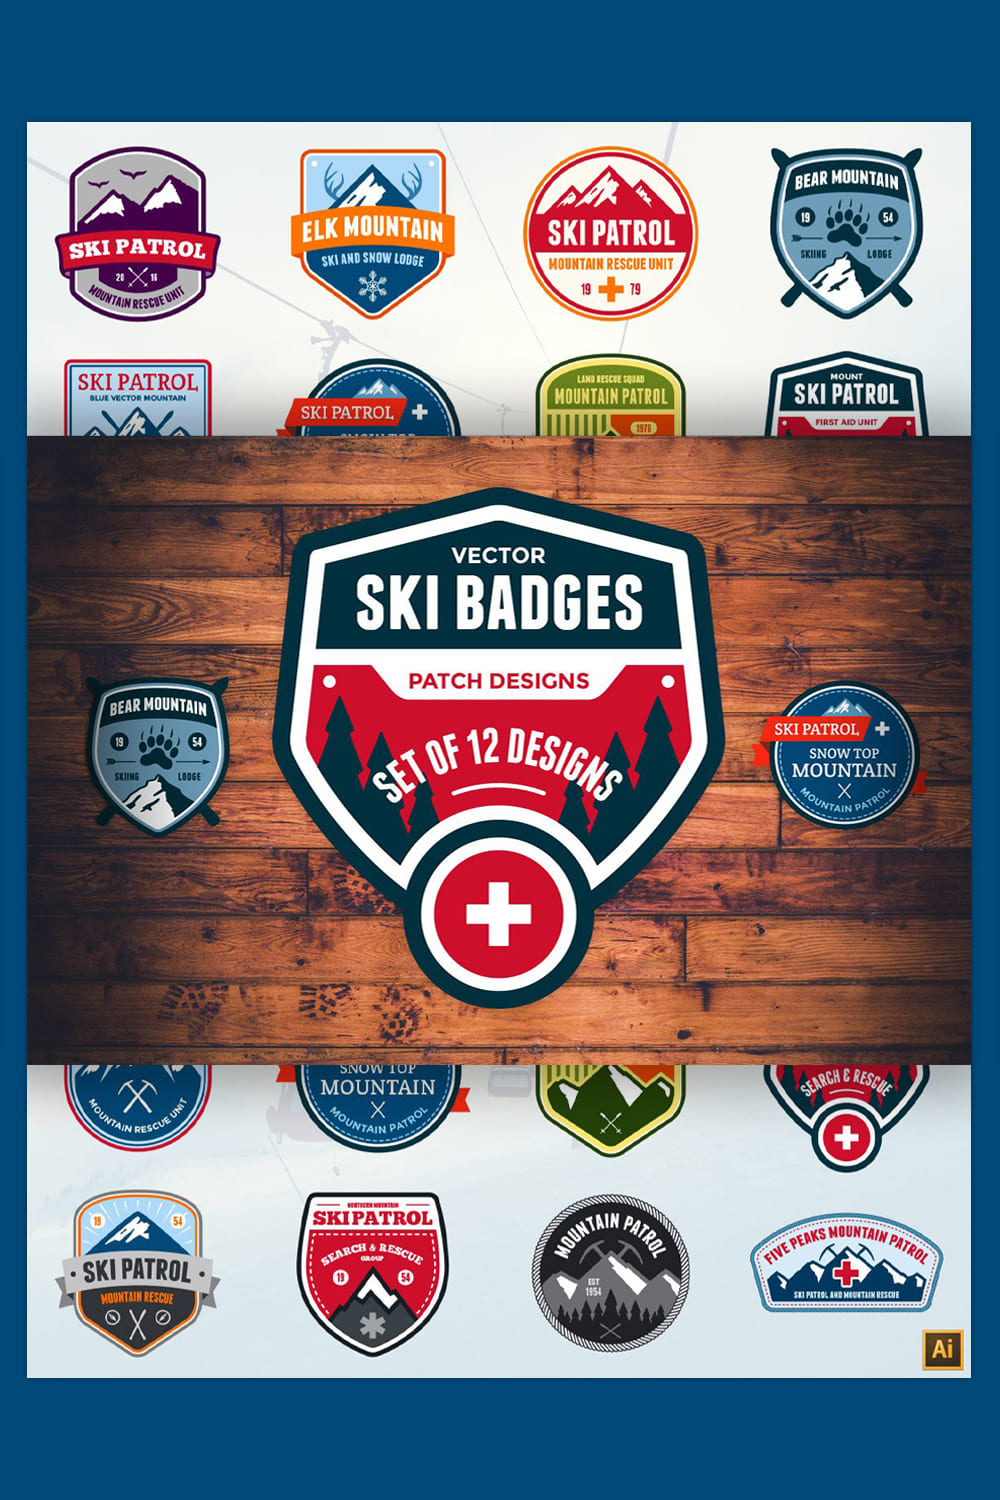 Ski Patrol Badges Pinterest image2.